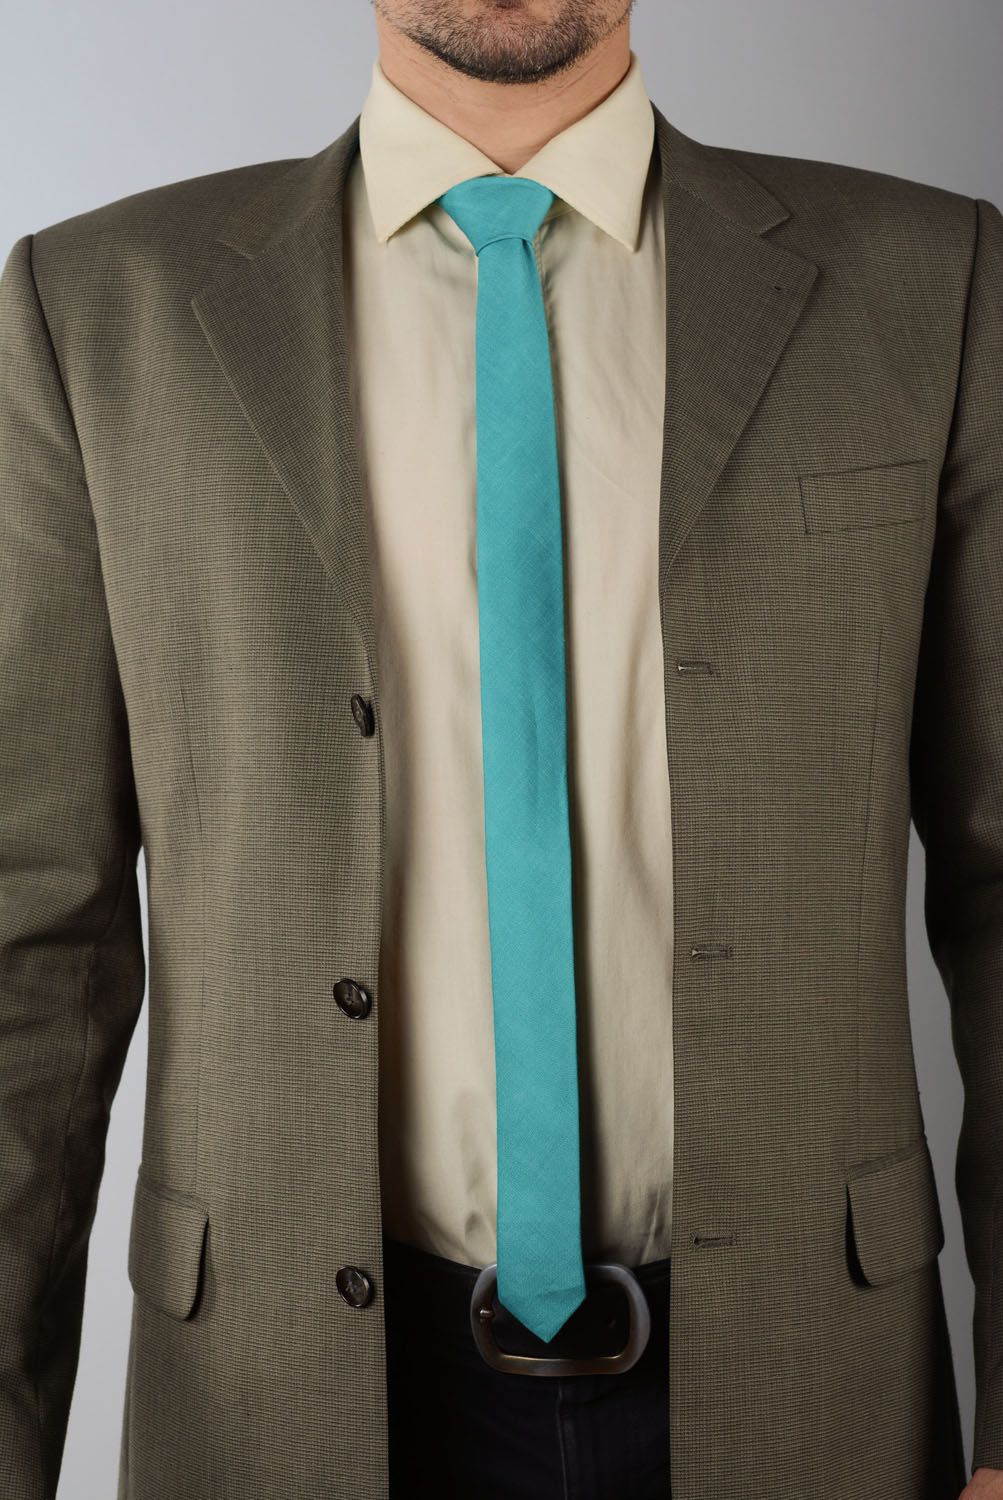 Cravate en lin bleue faite main photo 1